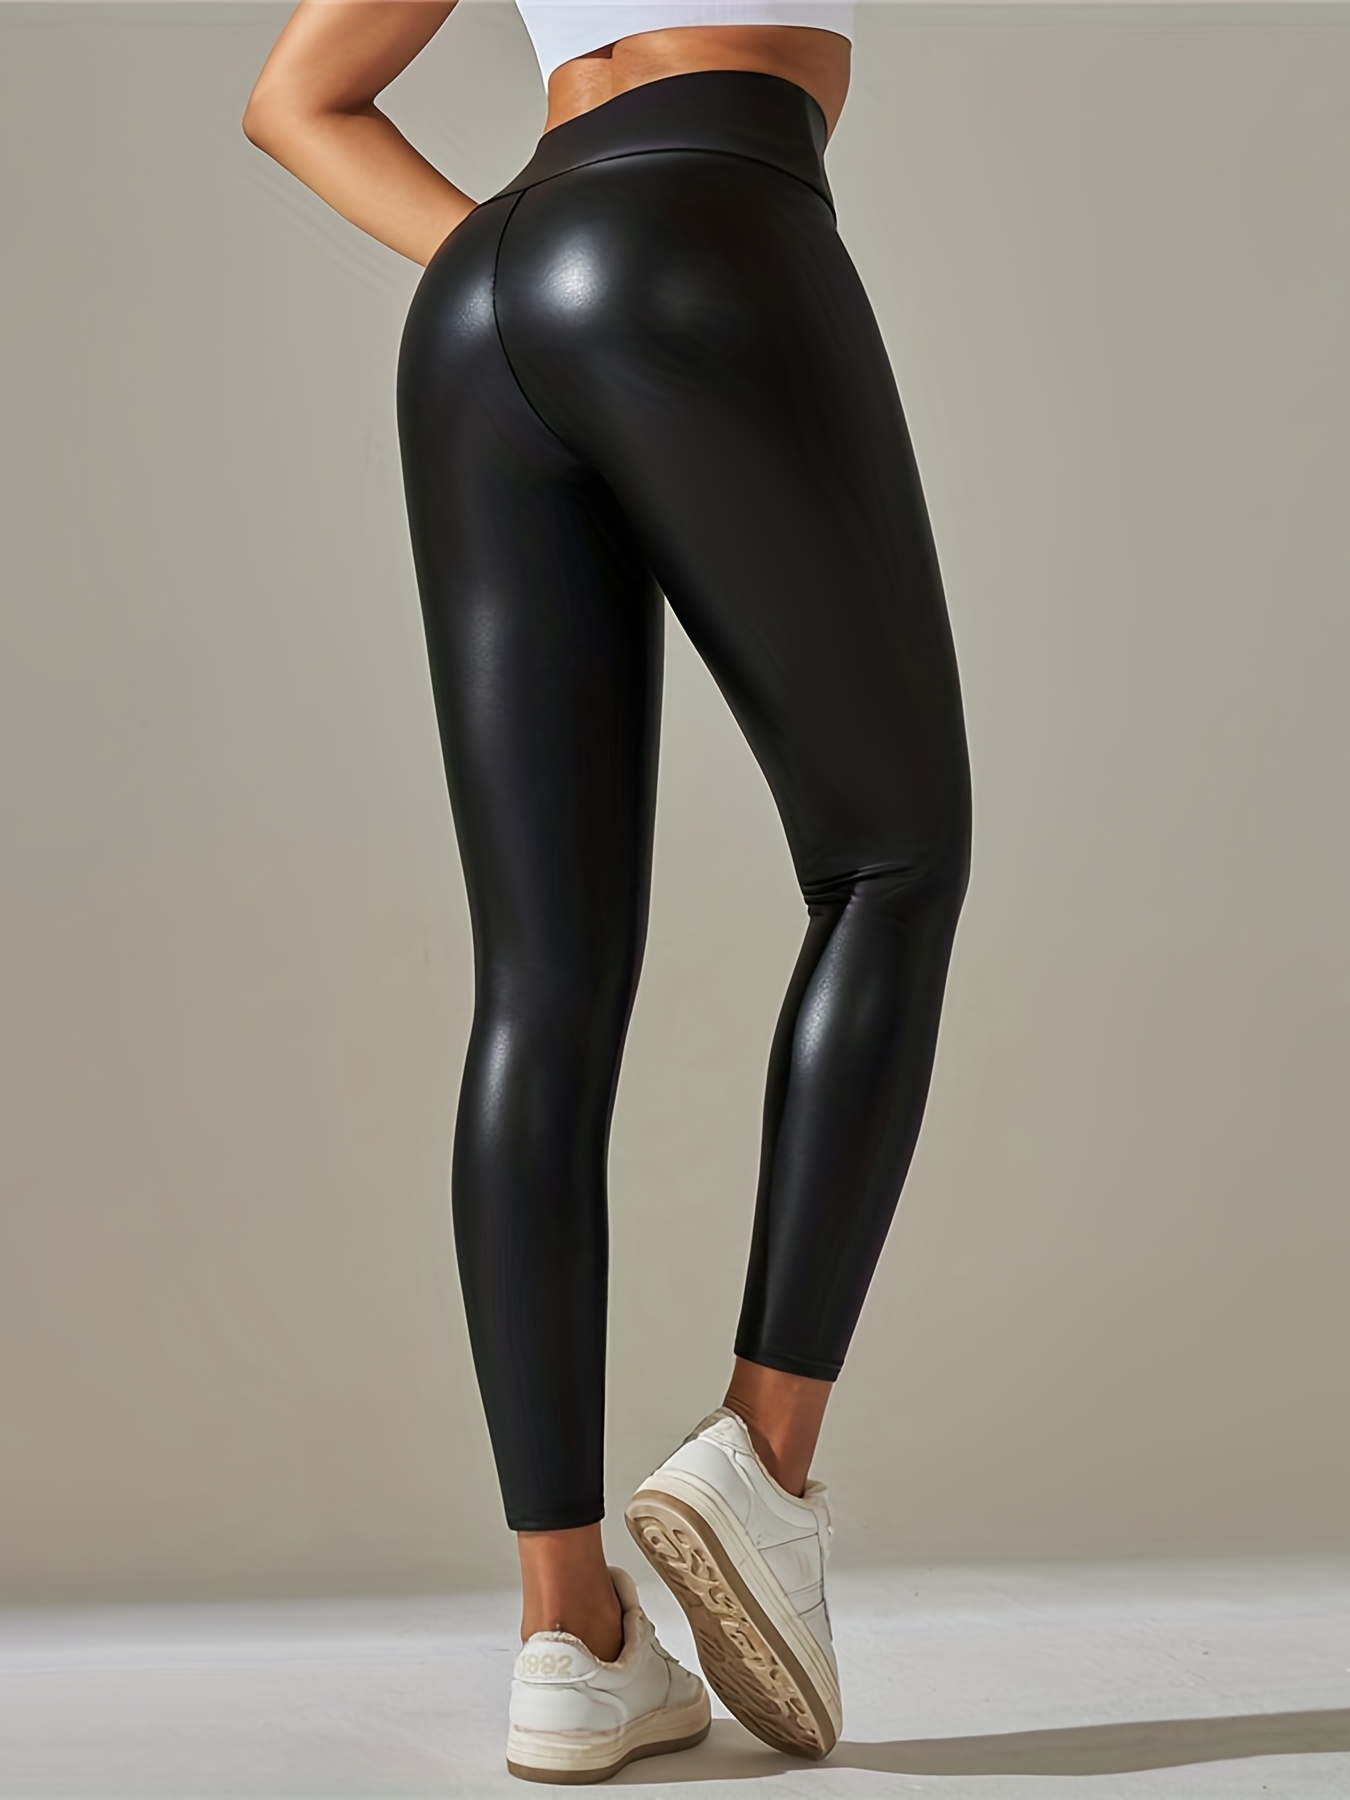 Buy Women Fashion Sexy Short Leggings High Waist Elastic Skinny